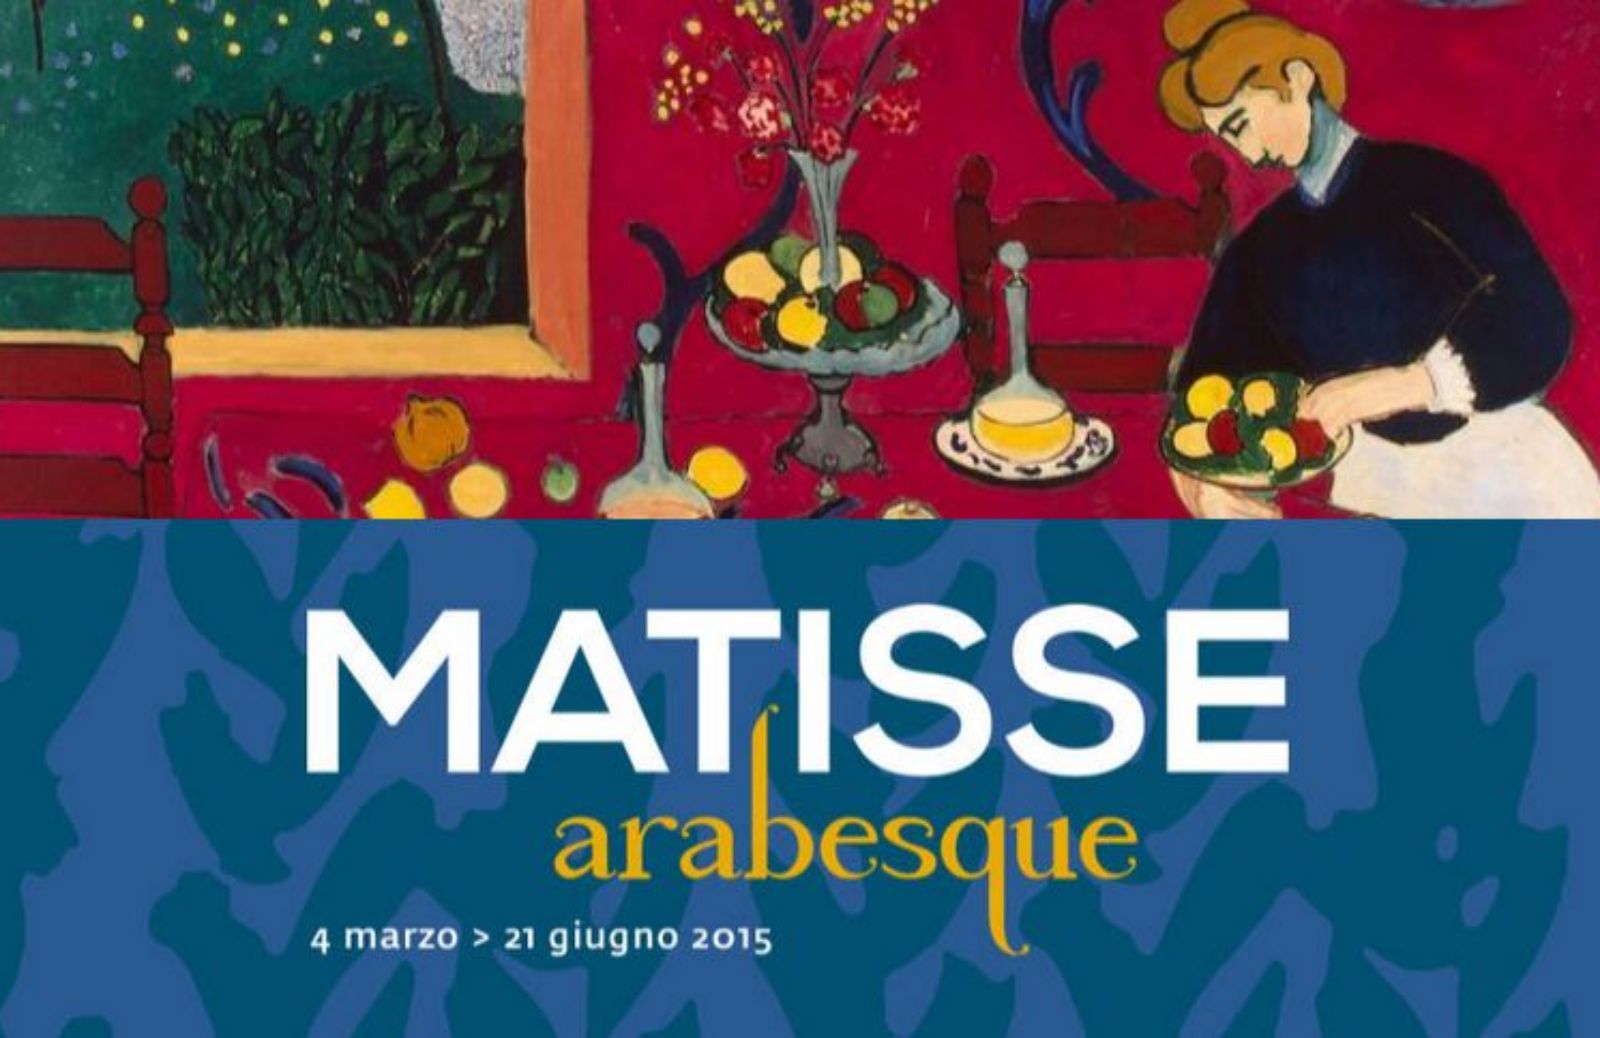 Matisse Arabesque, la mostra alle Scuderie del Quirinale 